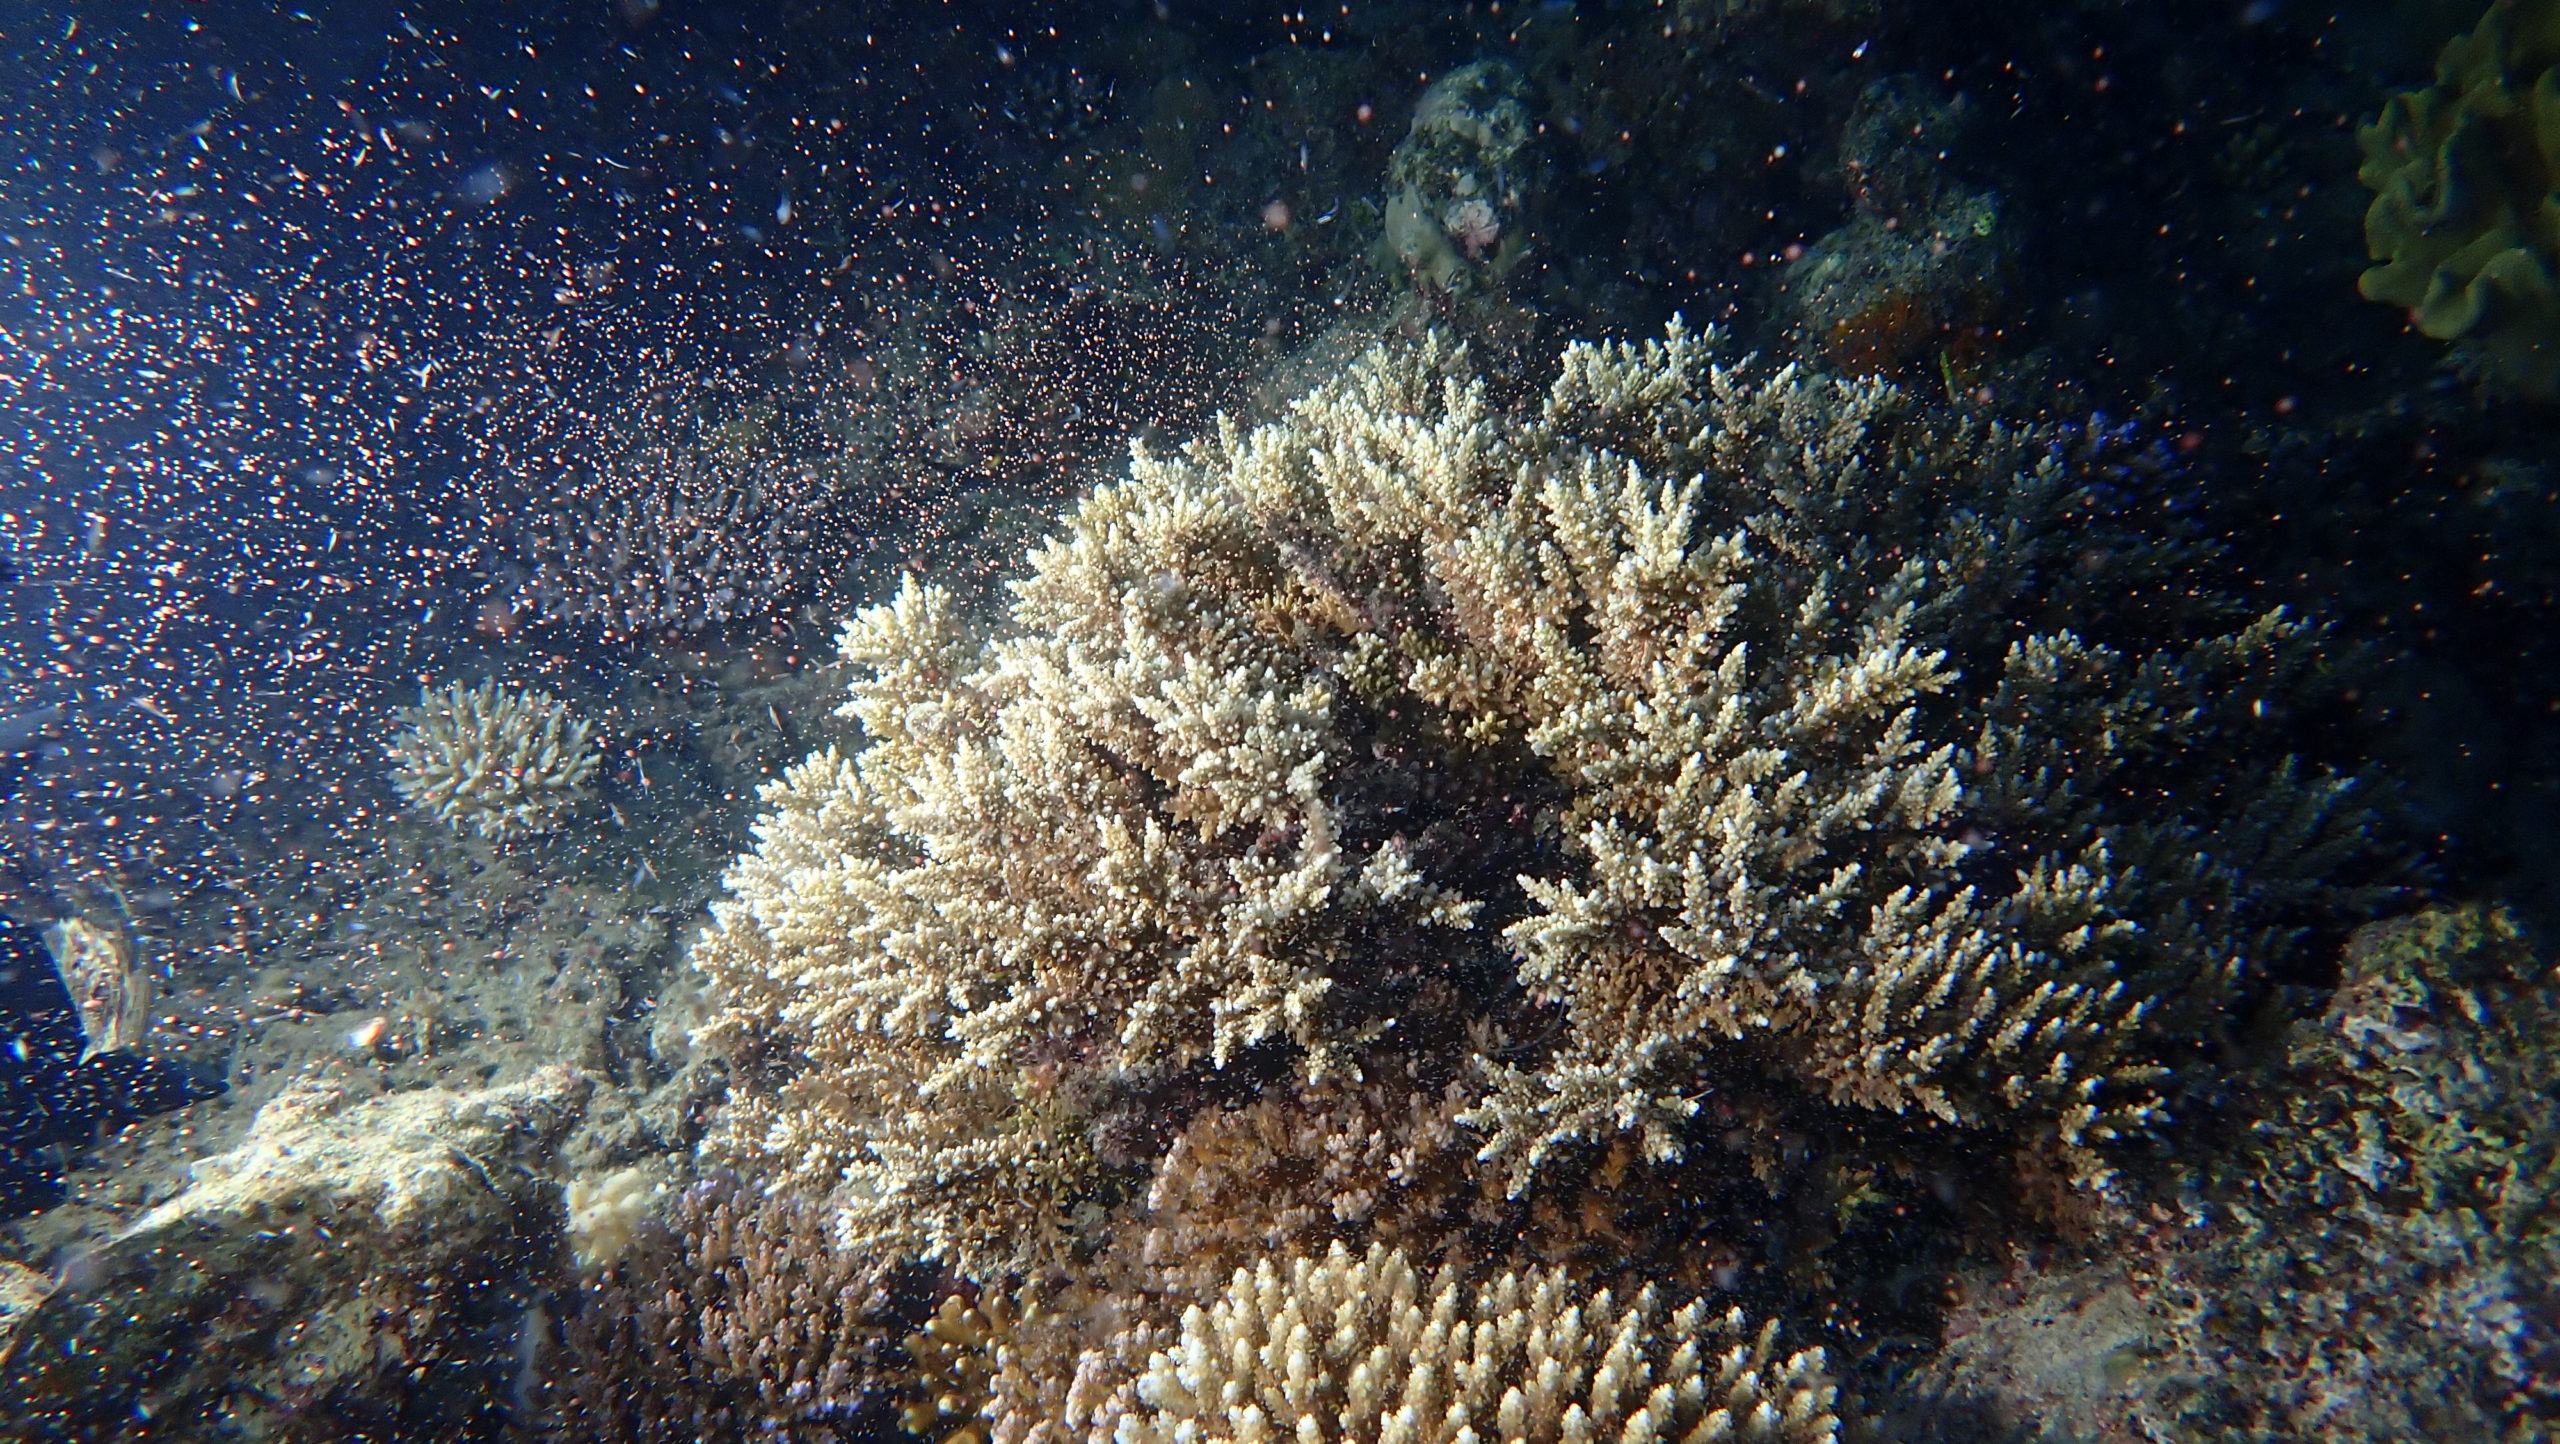 Coral spawning on Queenslands Great Barrier Reef on 5 December 2020